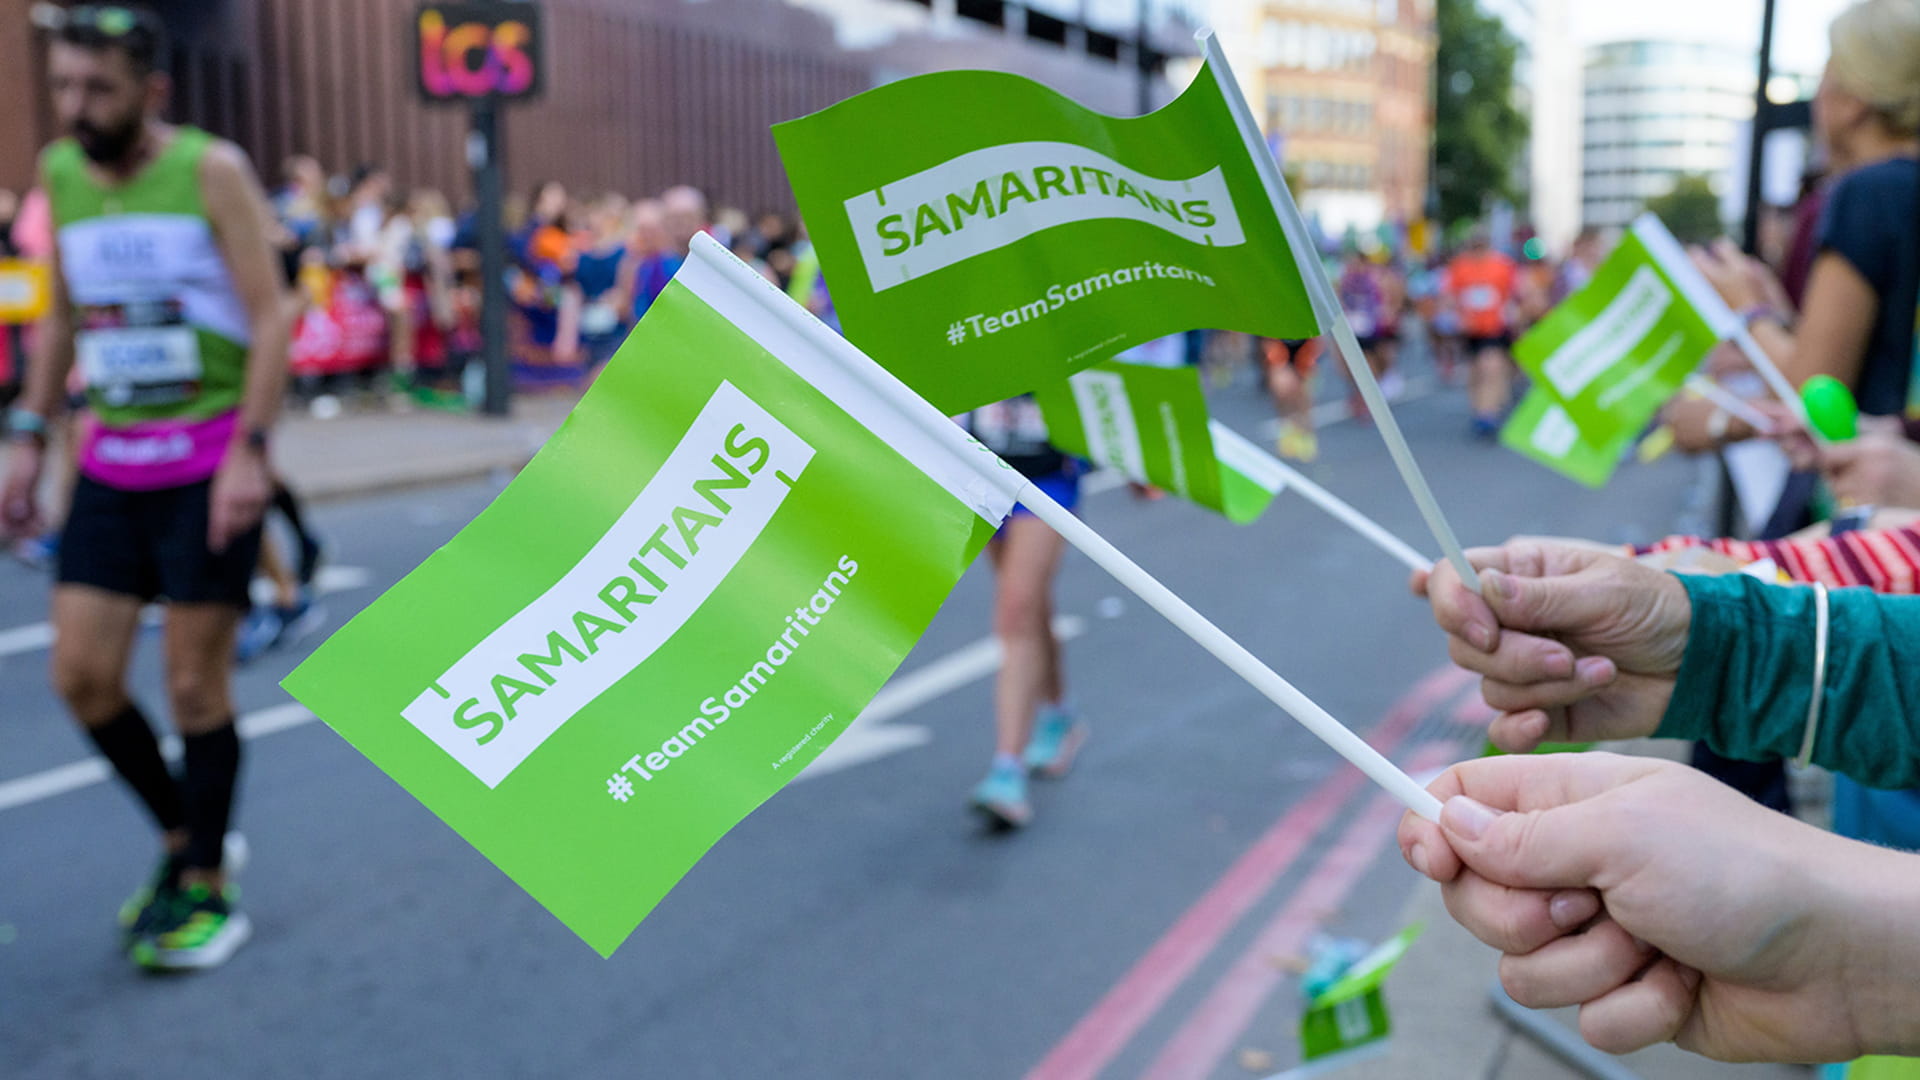 Crowd support for Samaritans at the TCS London Marathon